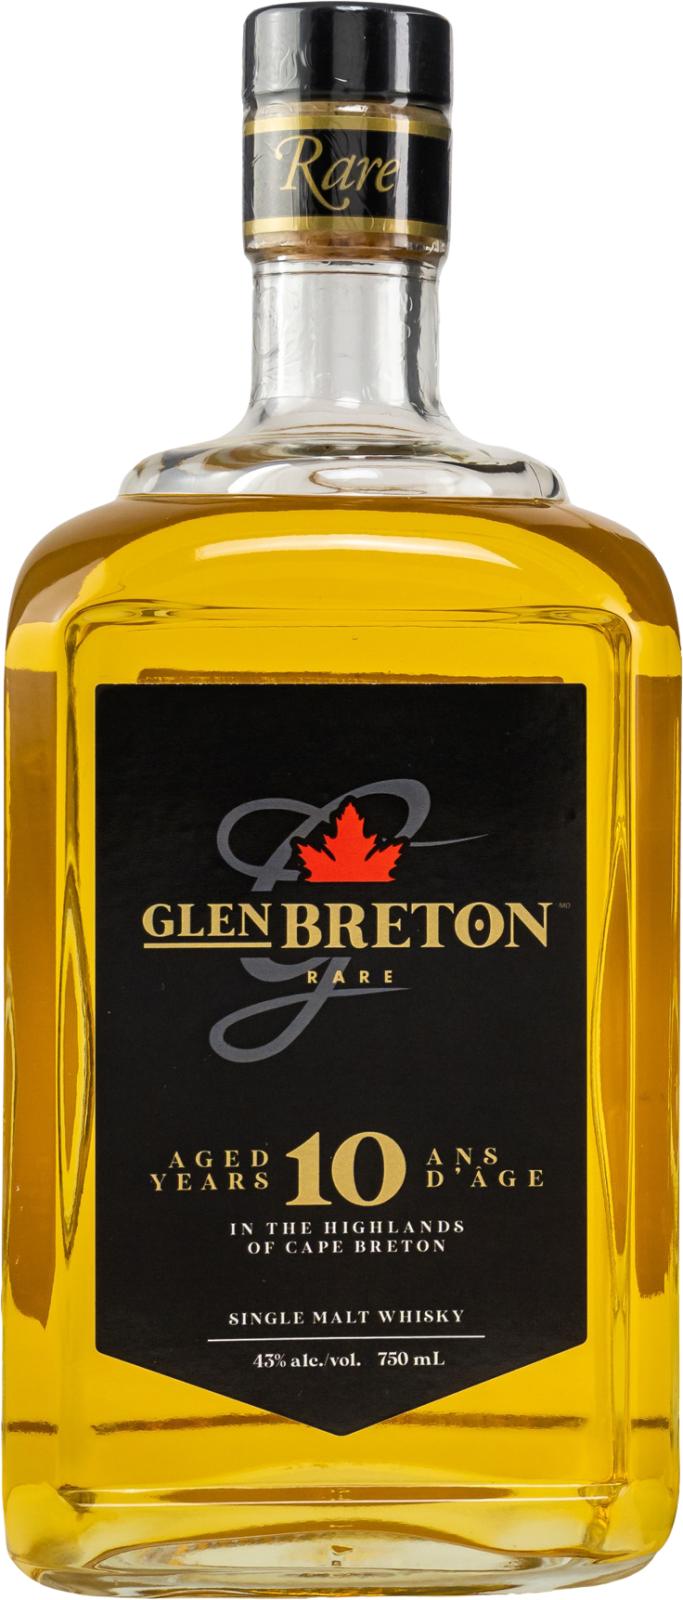 Glen Breton Rare 10-year-old